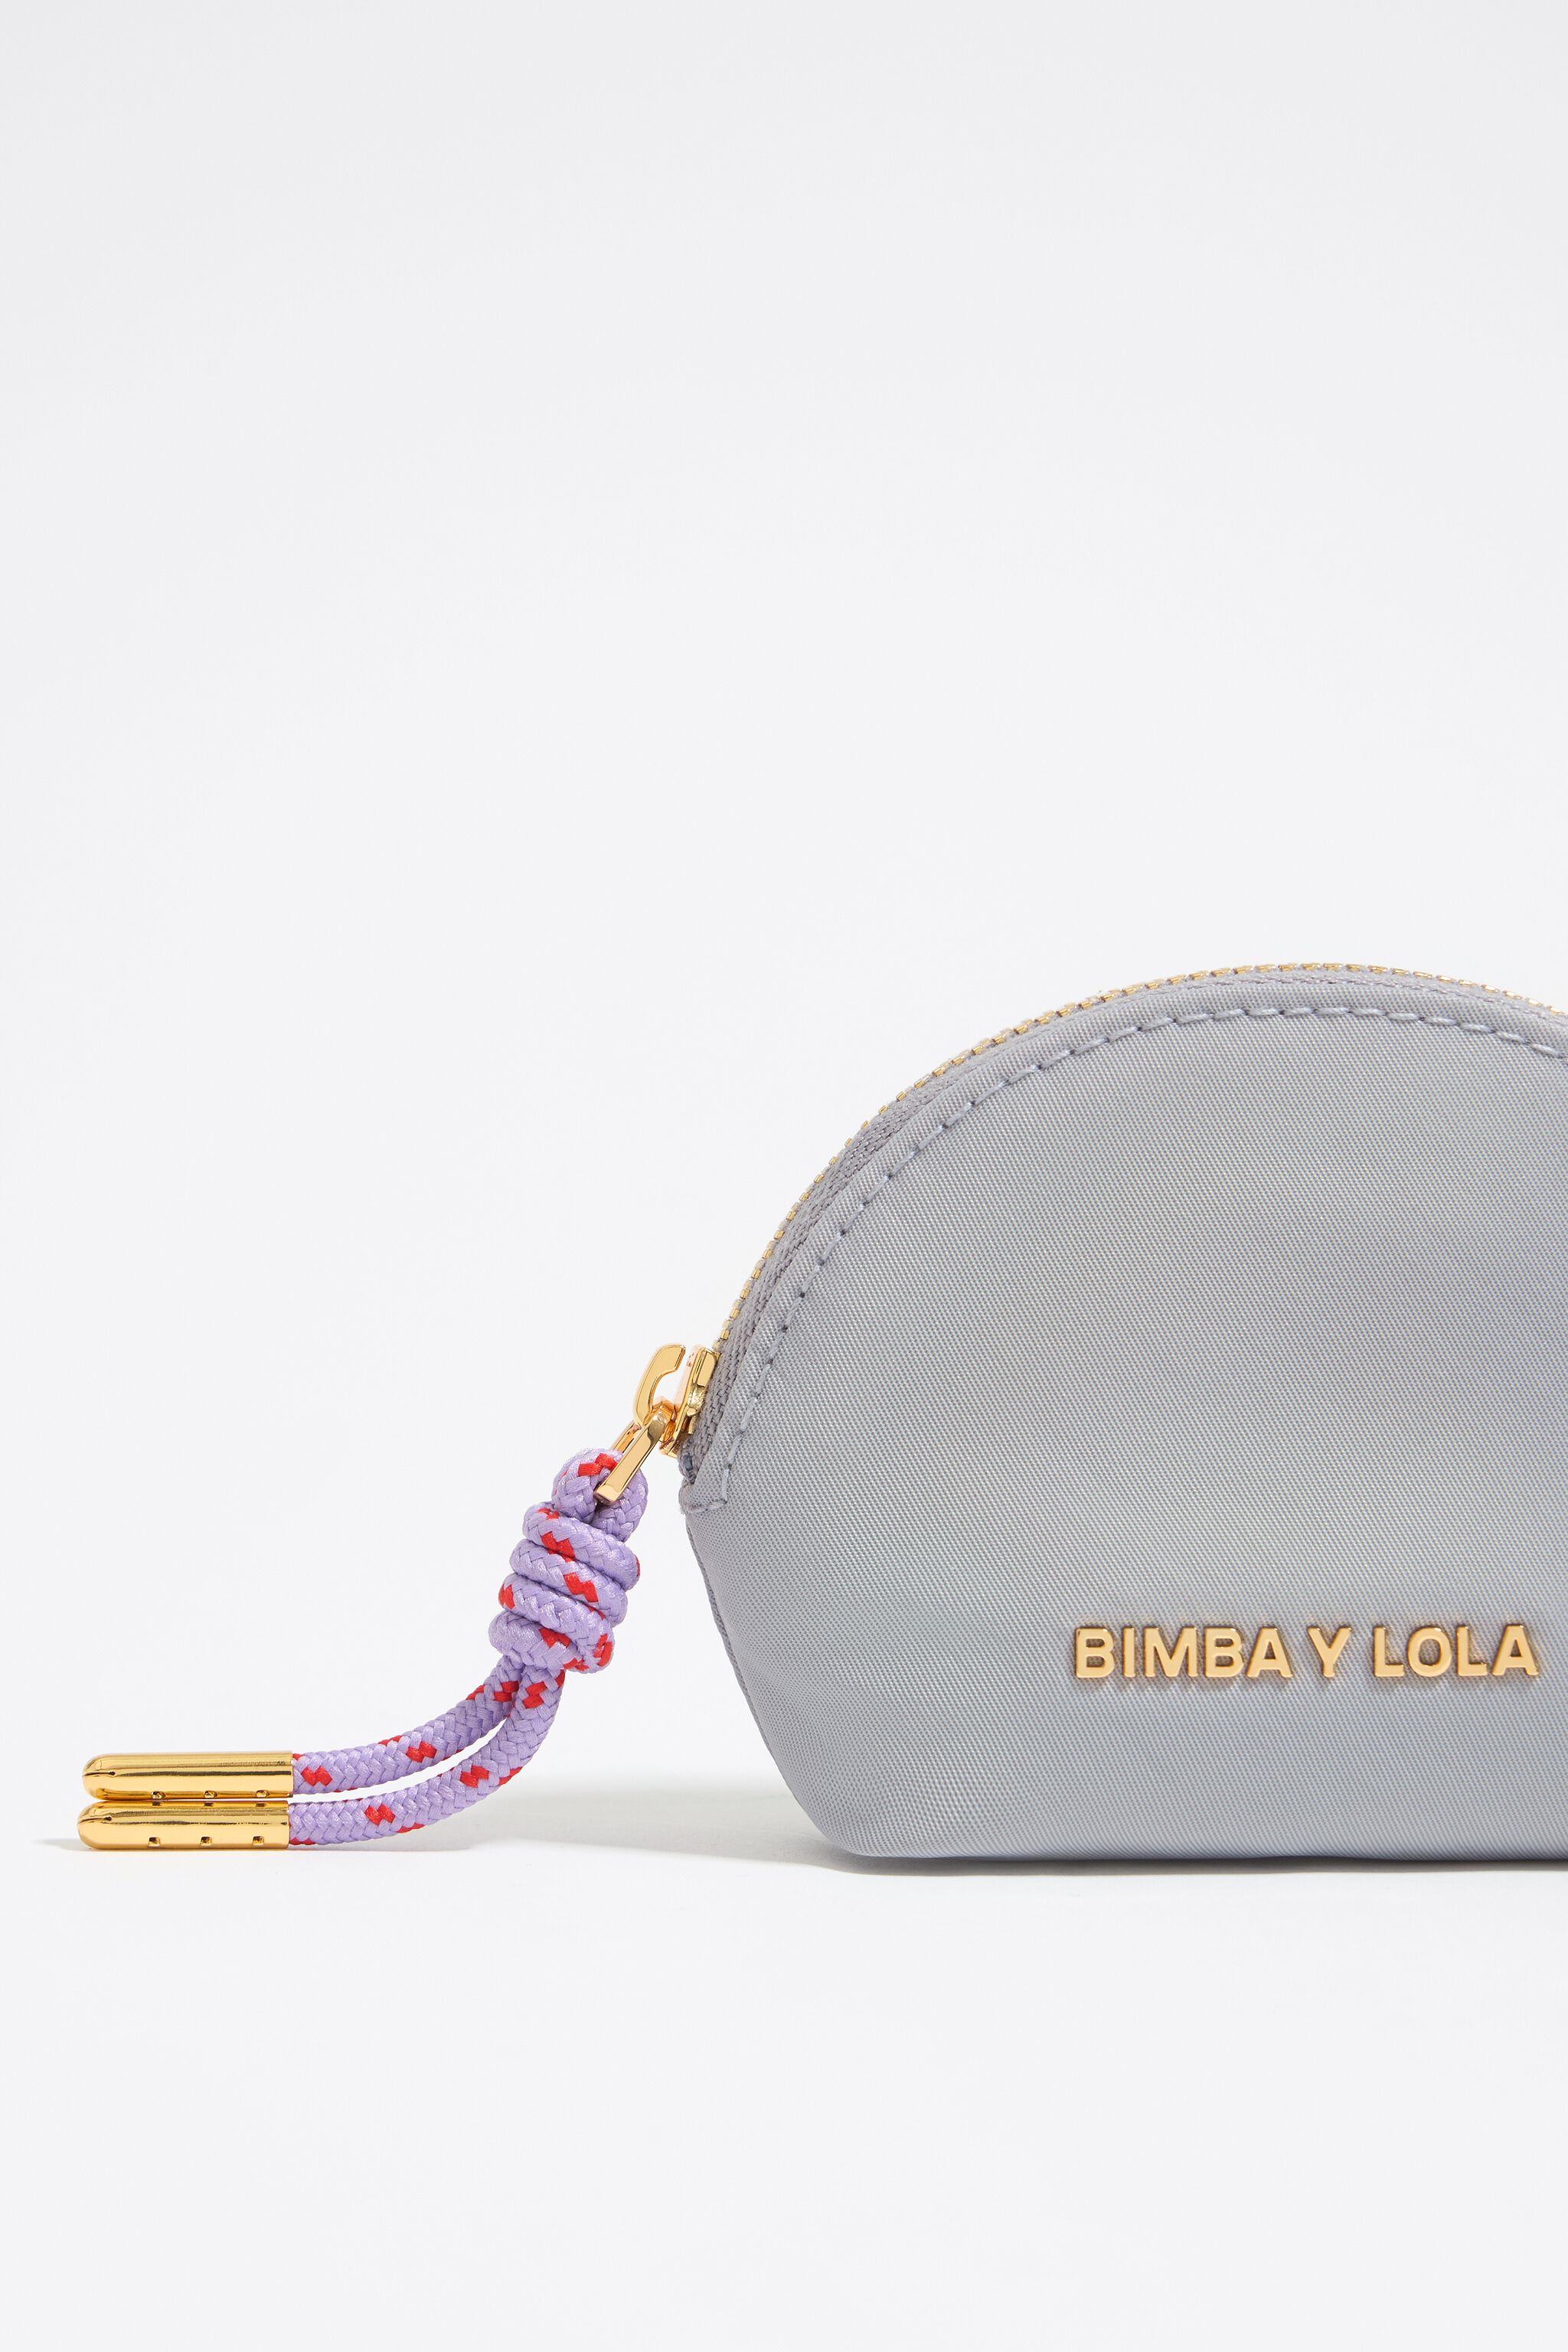 Christian Dior Makeup Travel Bag Pouch PINK Mirror powder case brush  clinique BB | eBay